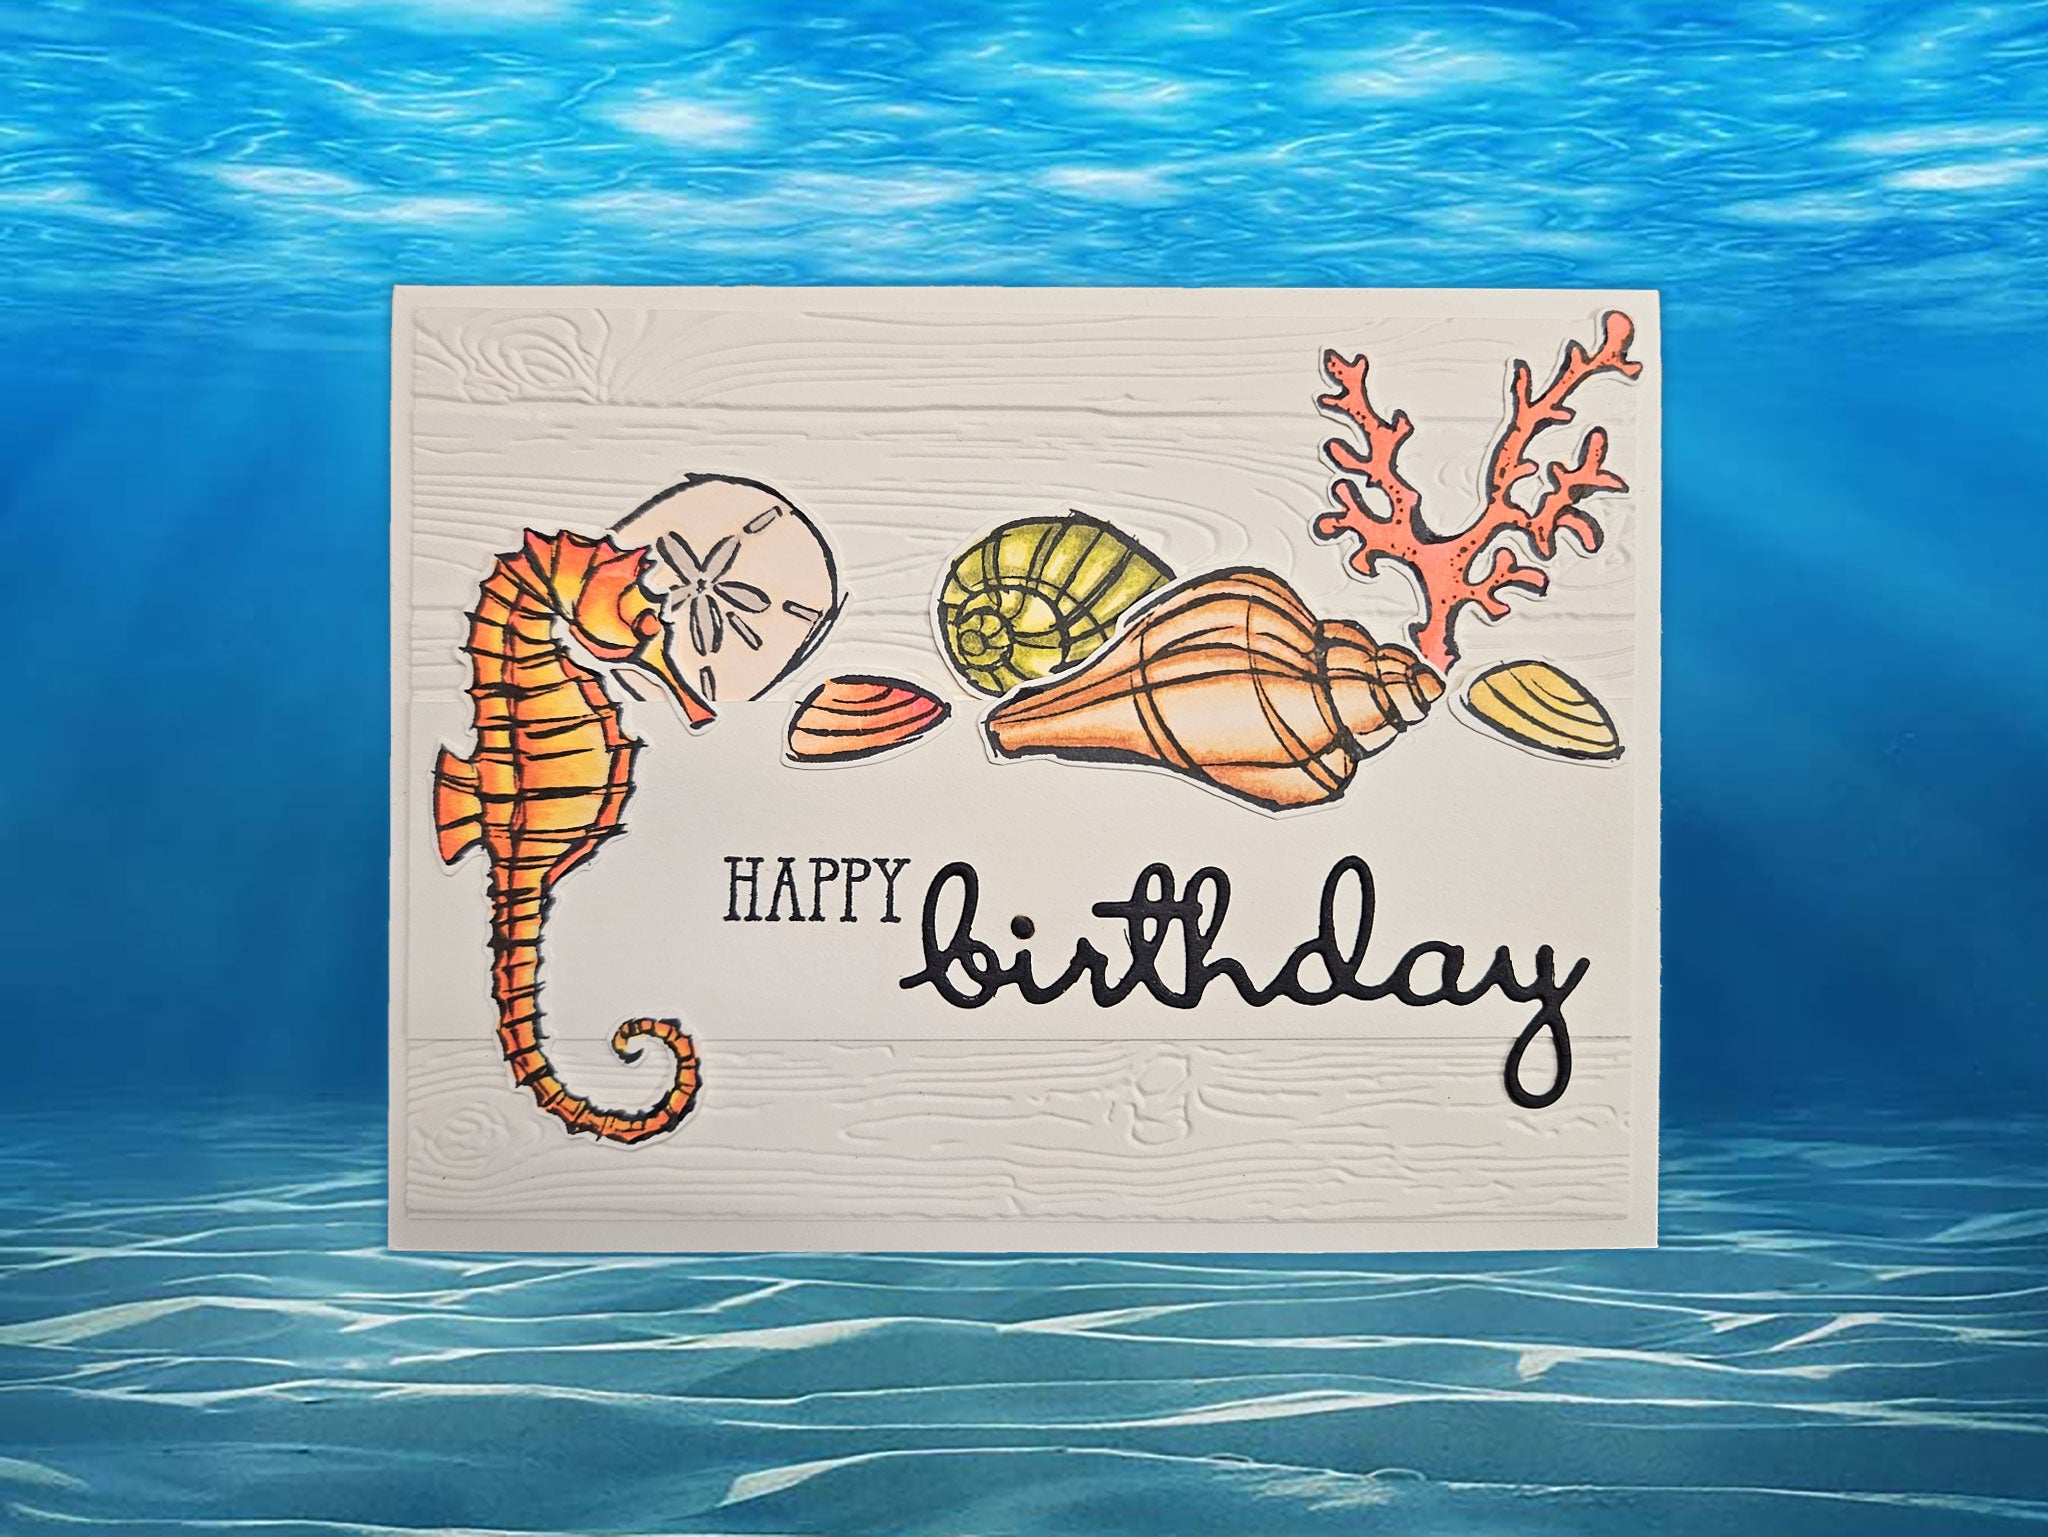 Shabby Chic Seahorse Birthday Card - Encinitas Surfboards